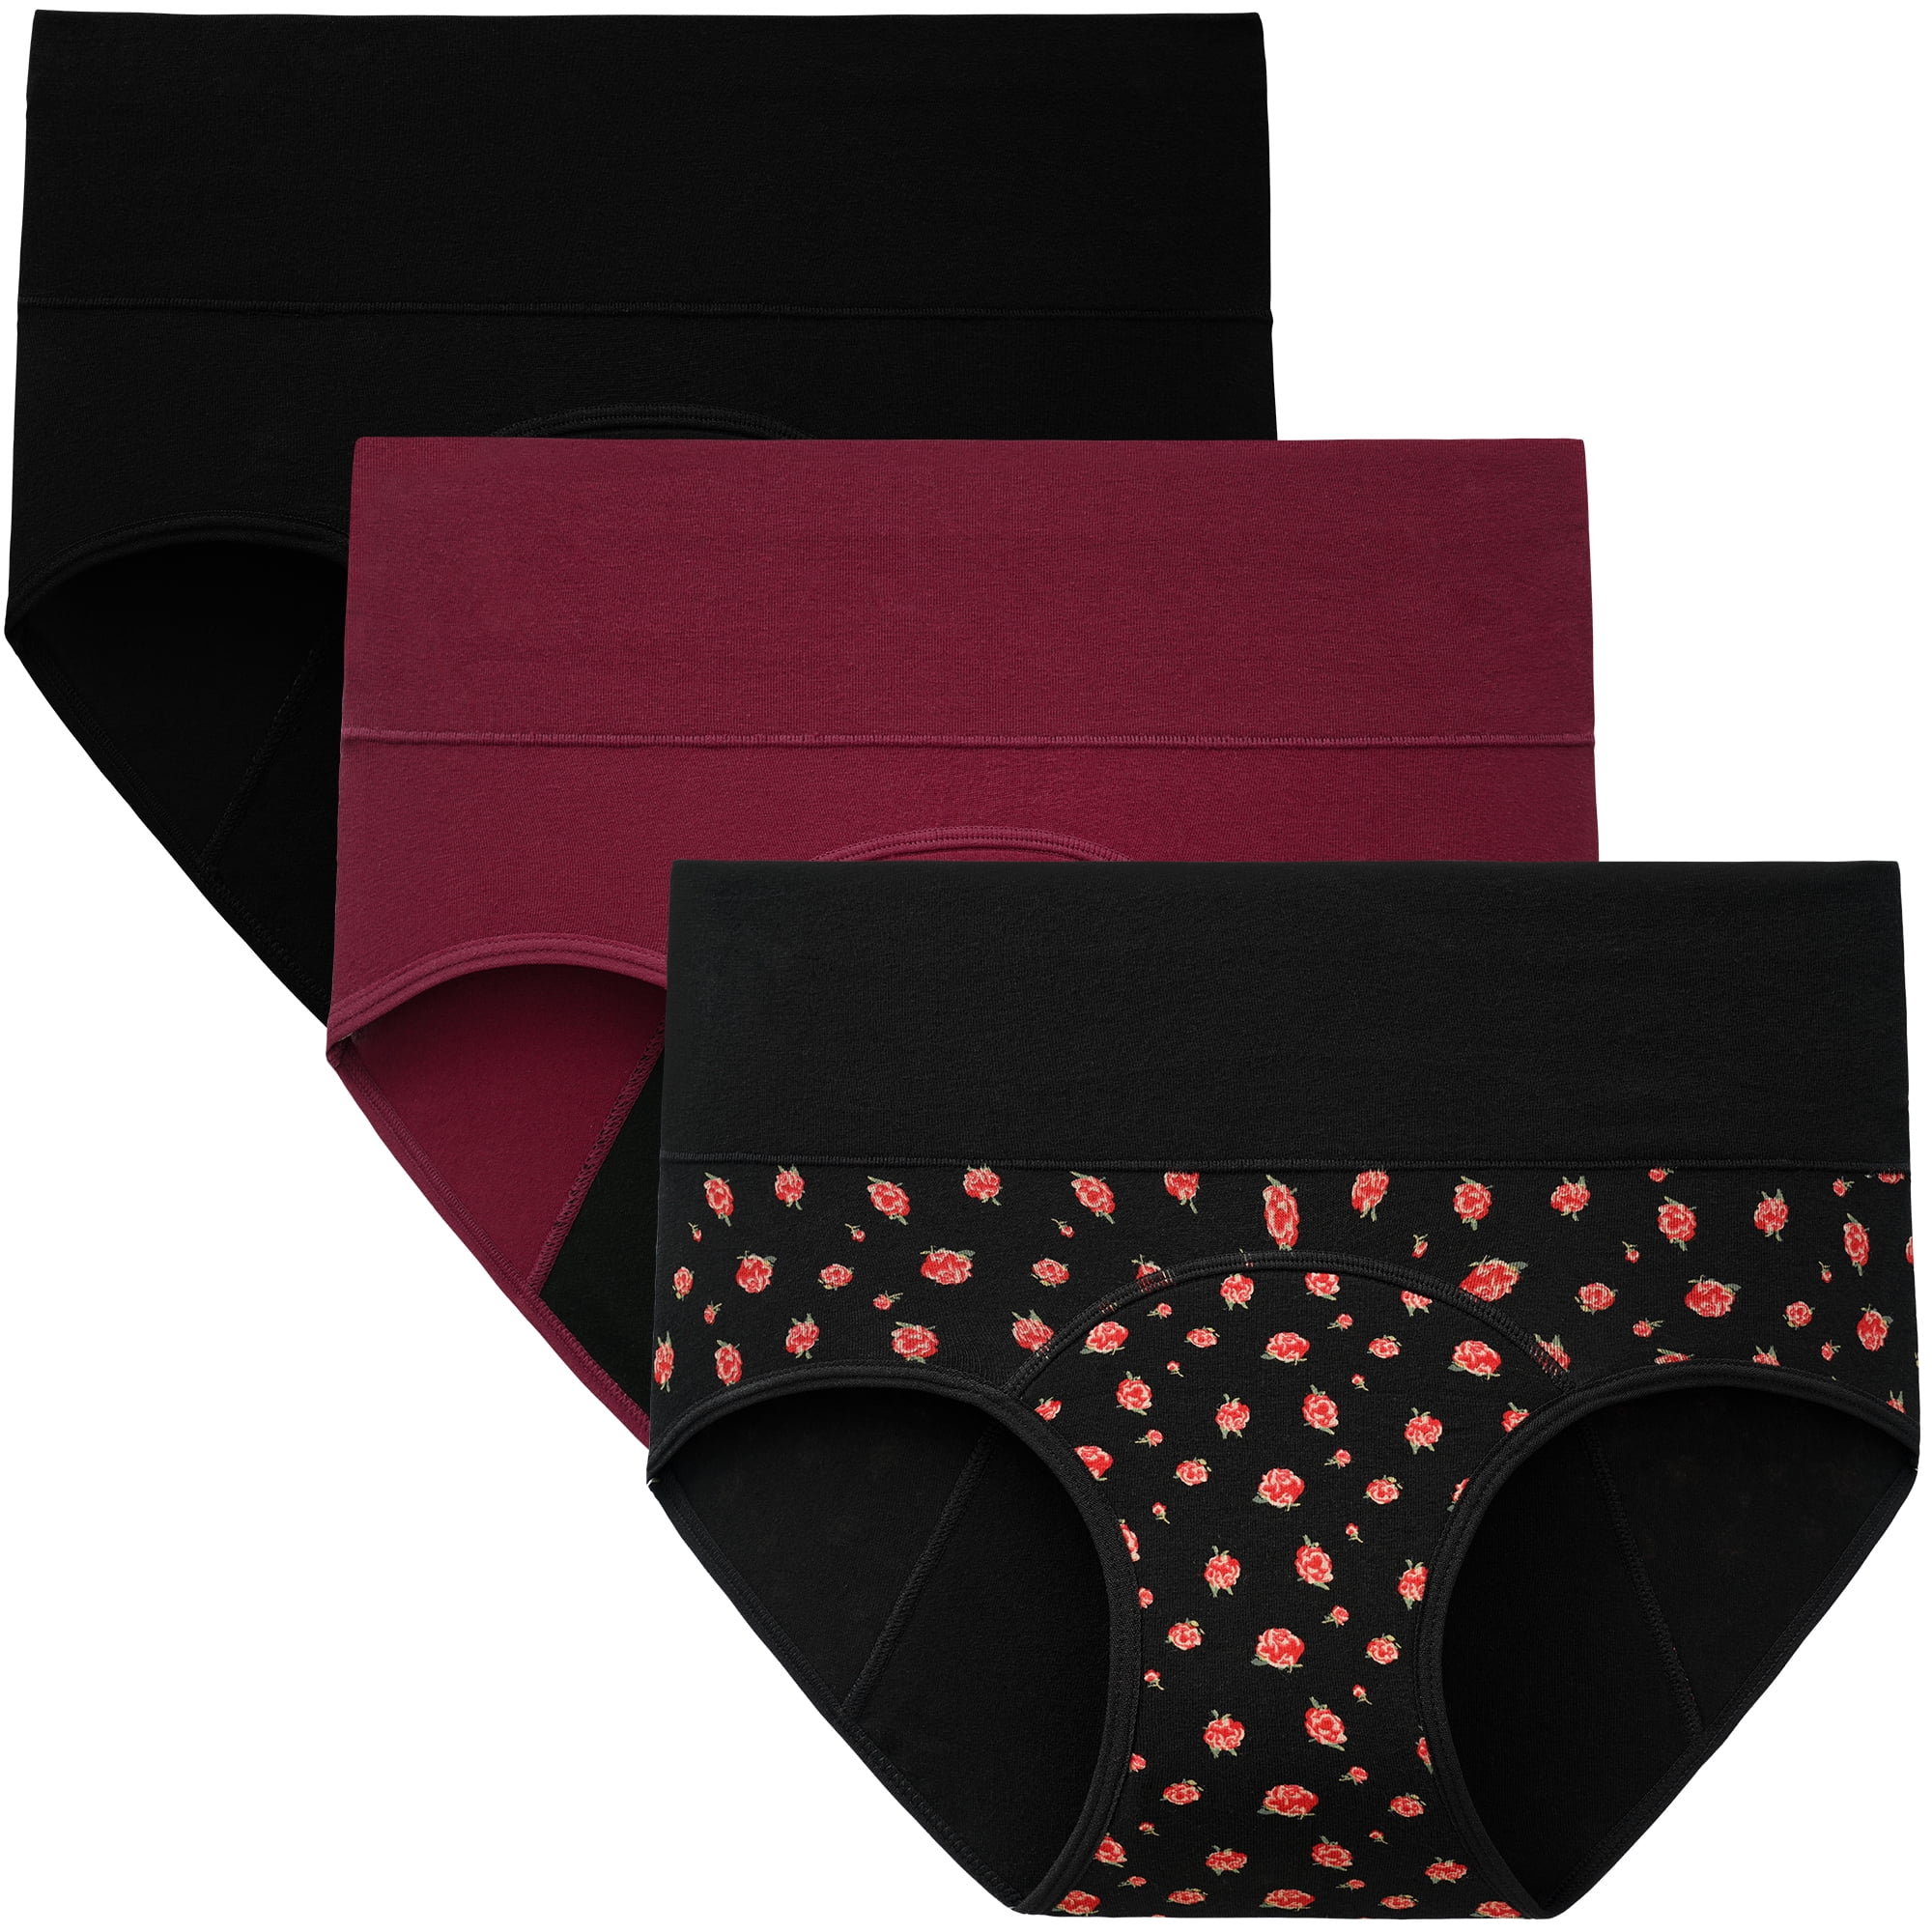  PULIOU Period Underwear For Women Menstrual Panties Teens  High Waisted Cotton Postpartum 3 Pack XS